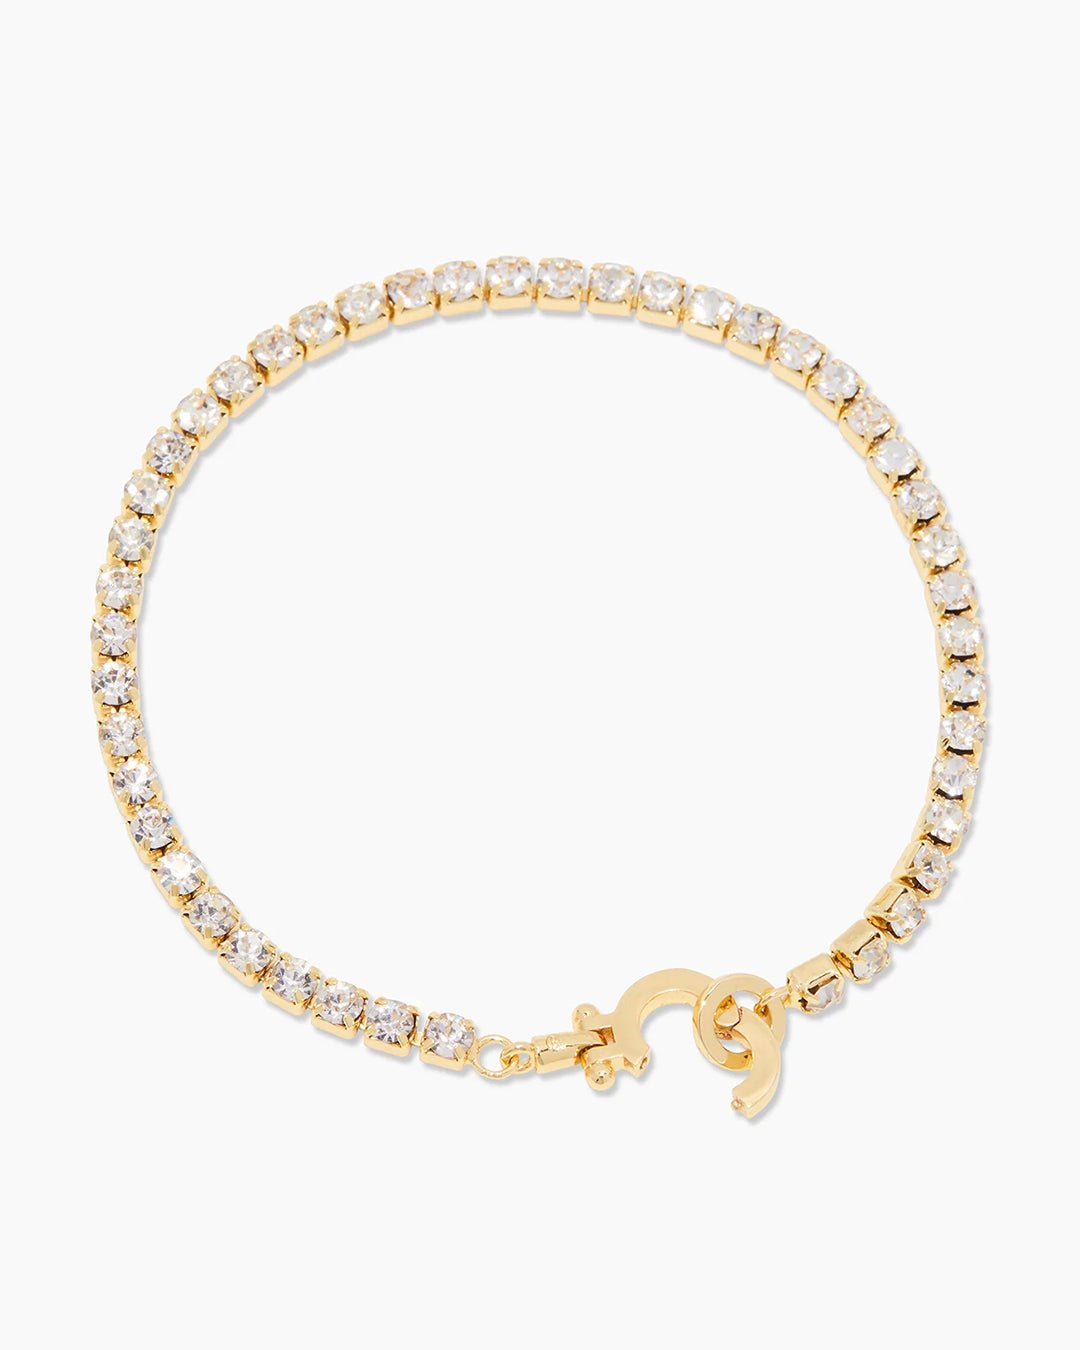 Parker Shimmer Clasp Bracelet  holiday party bracelet || option::Gold Plated, White Crystal